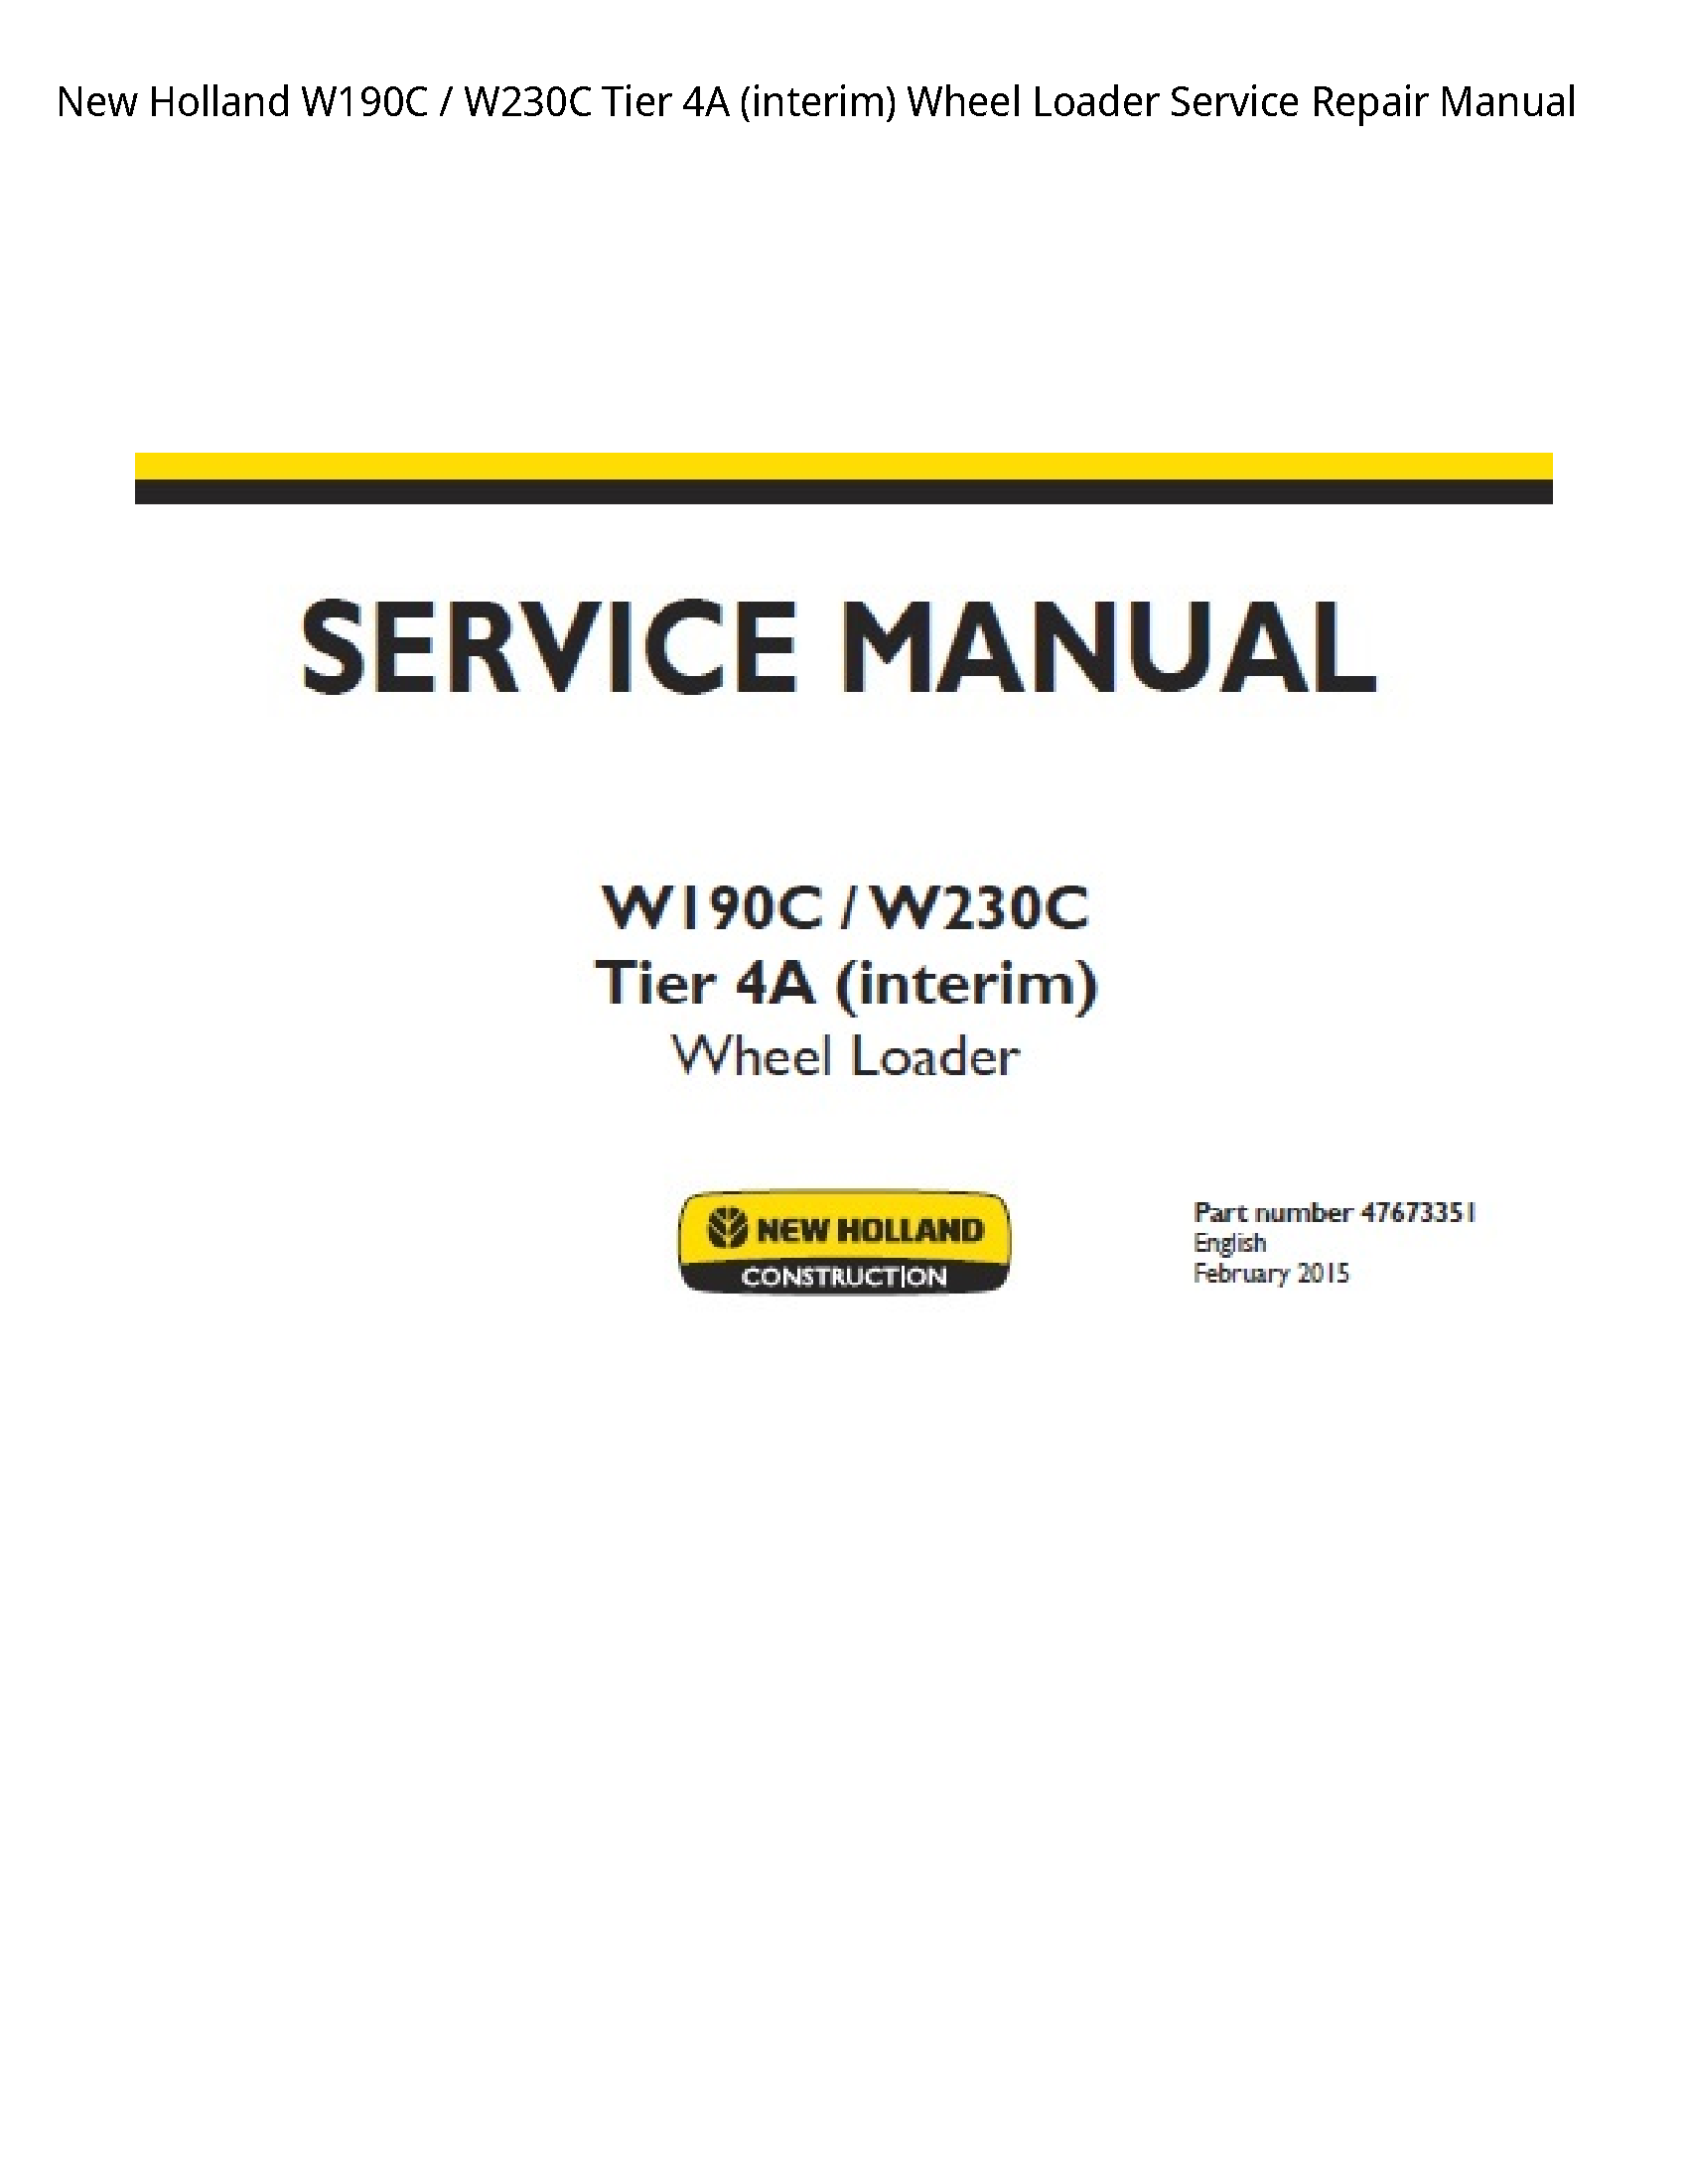 New Holland W190C Tier (interim) Wheel Loader manual